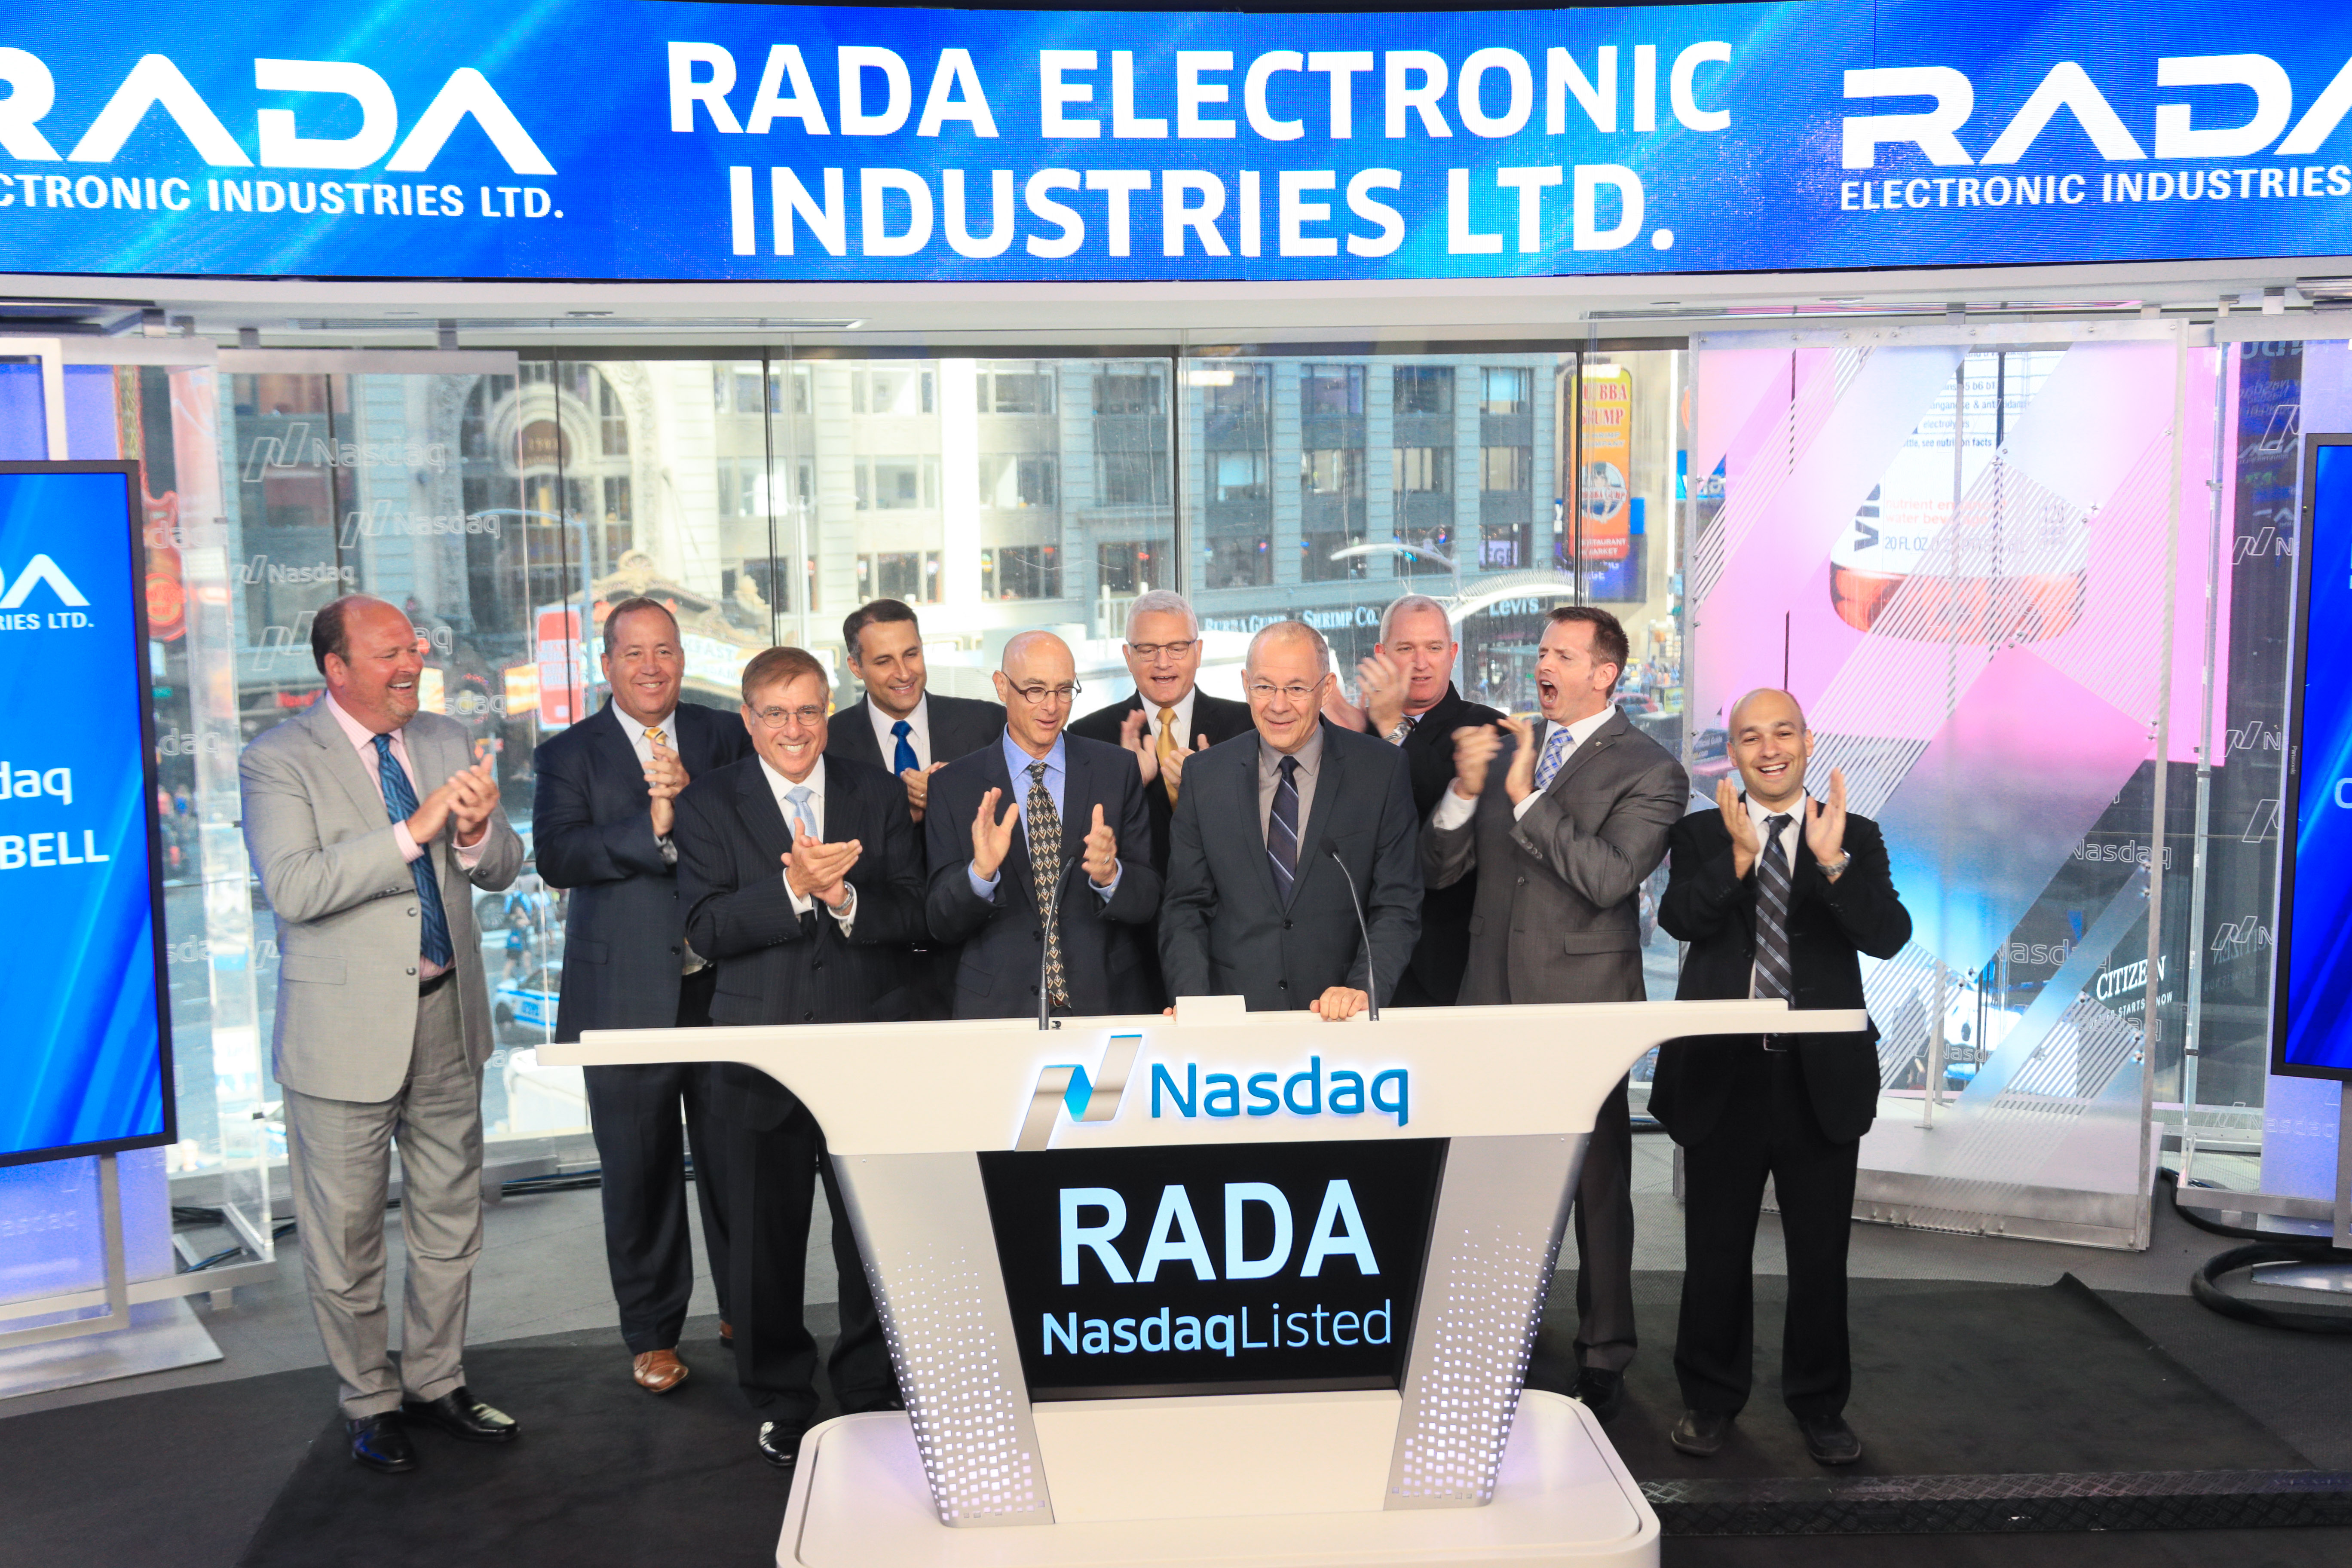 RADa israel Going Public on NASDAQ